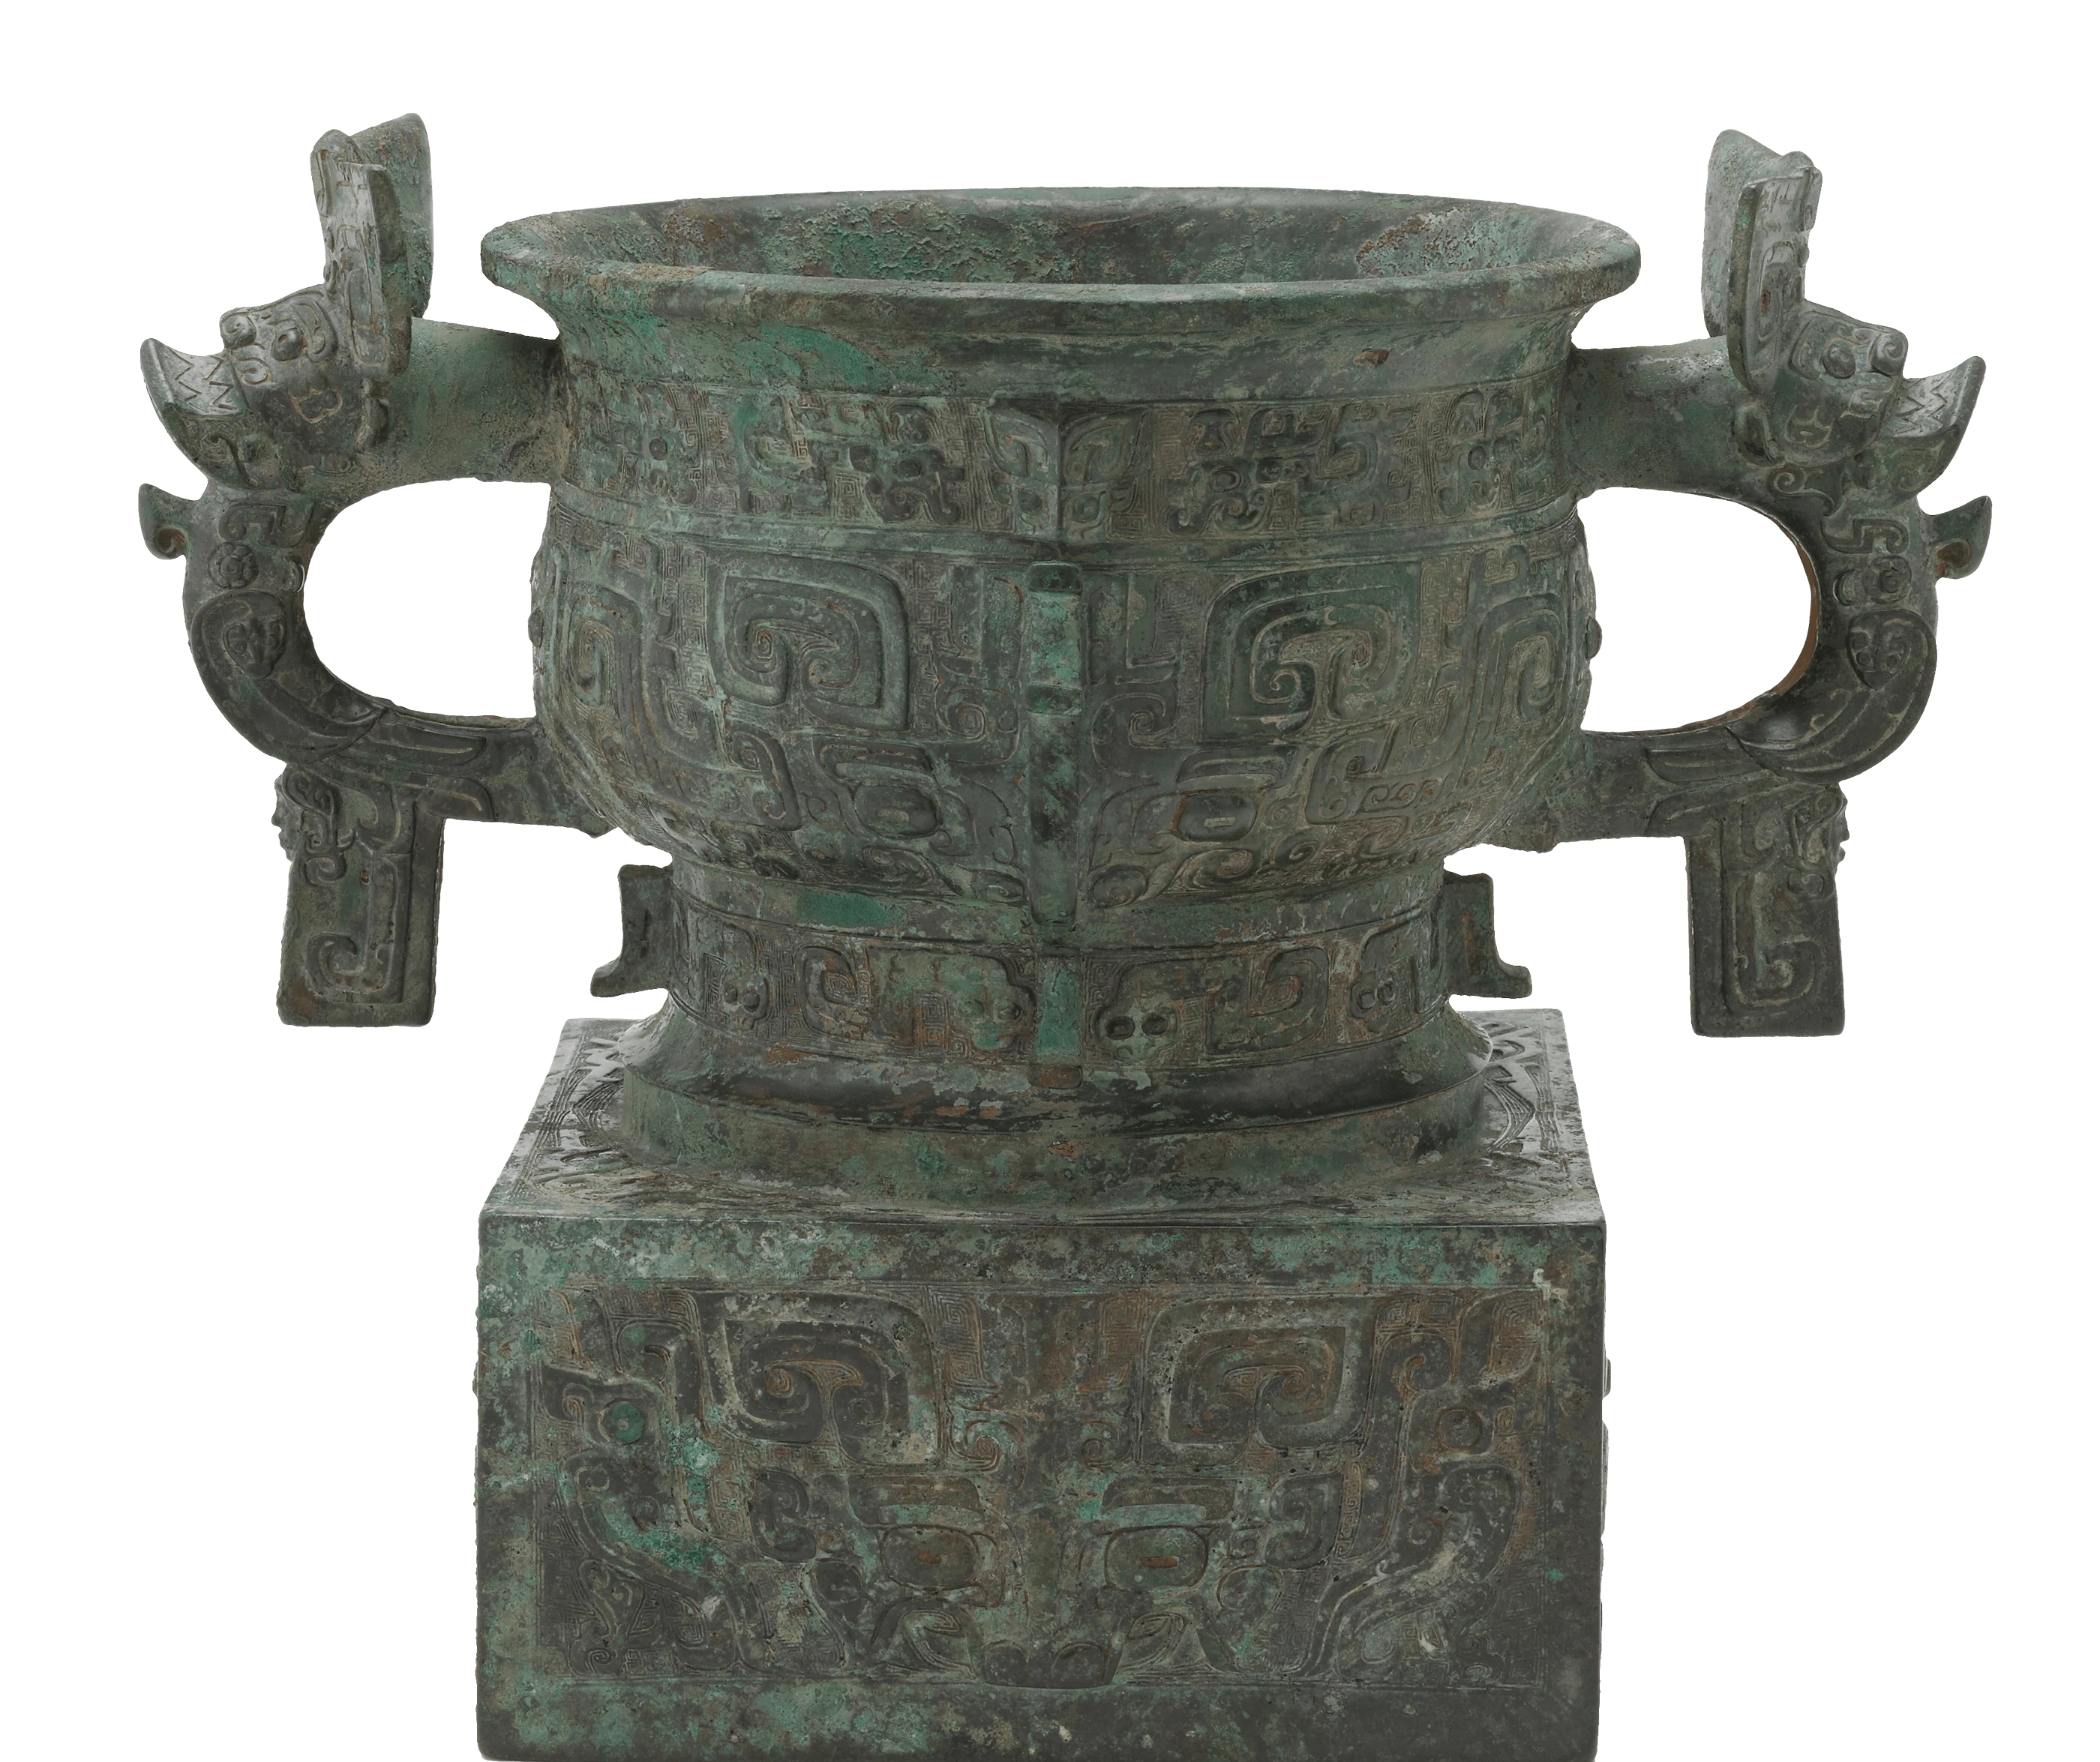 Ritual grain server (Gui), Ancient China